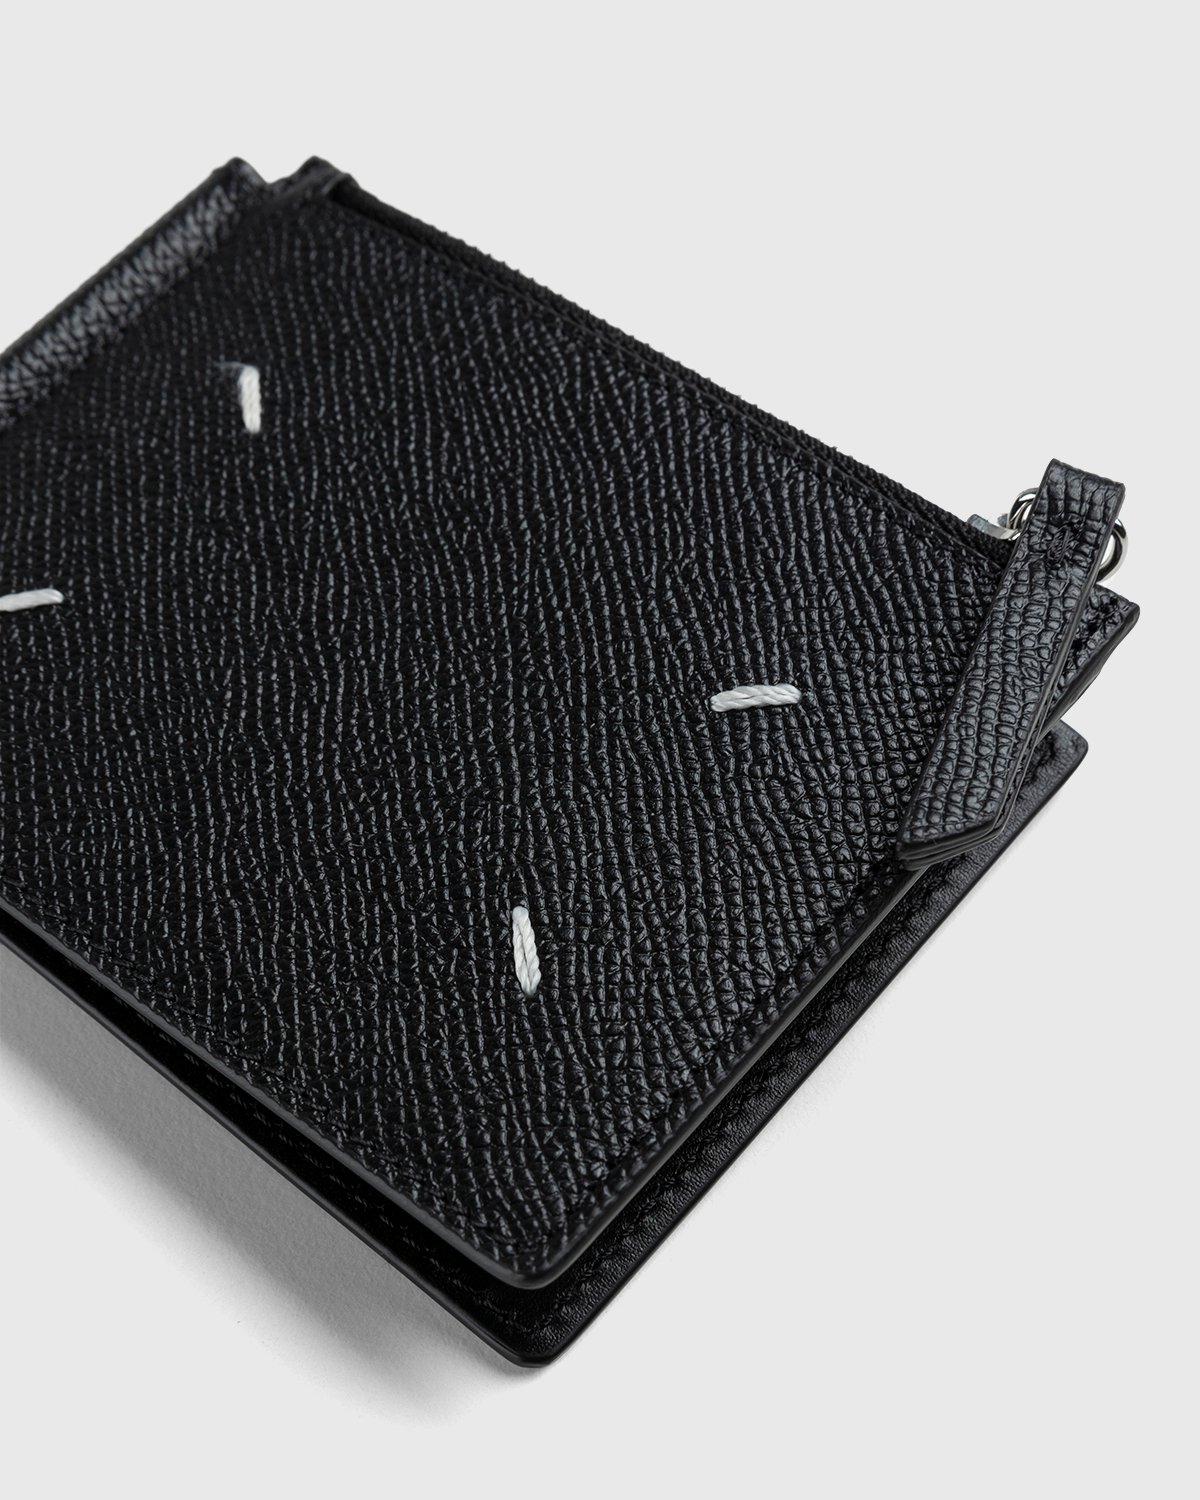 Maison Margiela - Leather Card Holder With Money Clip Black - Accessories - Black - Image 3